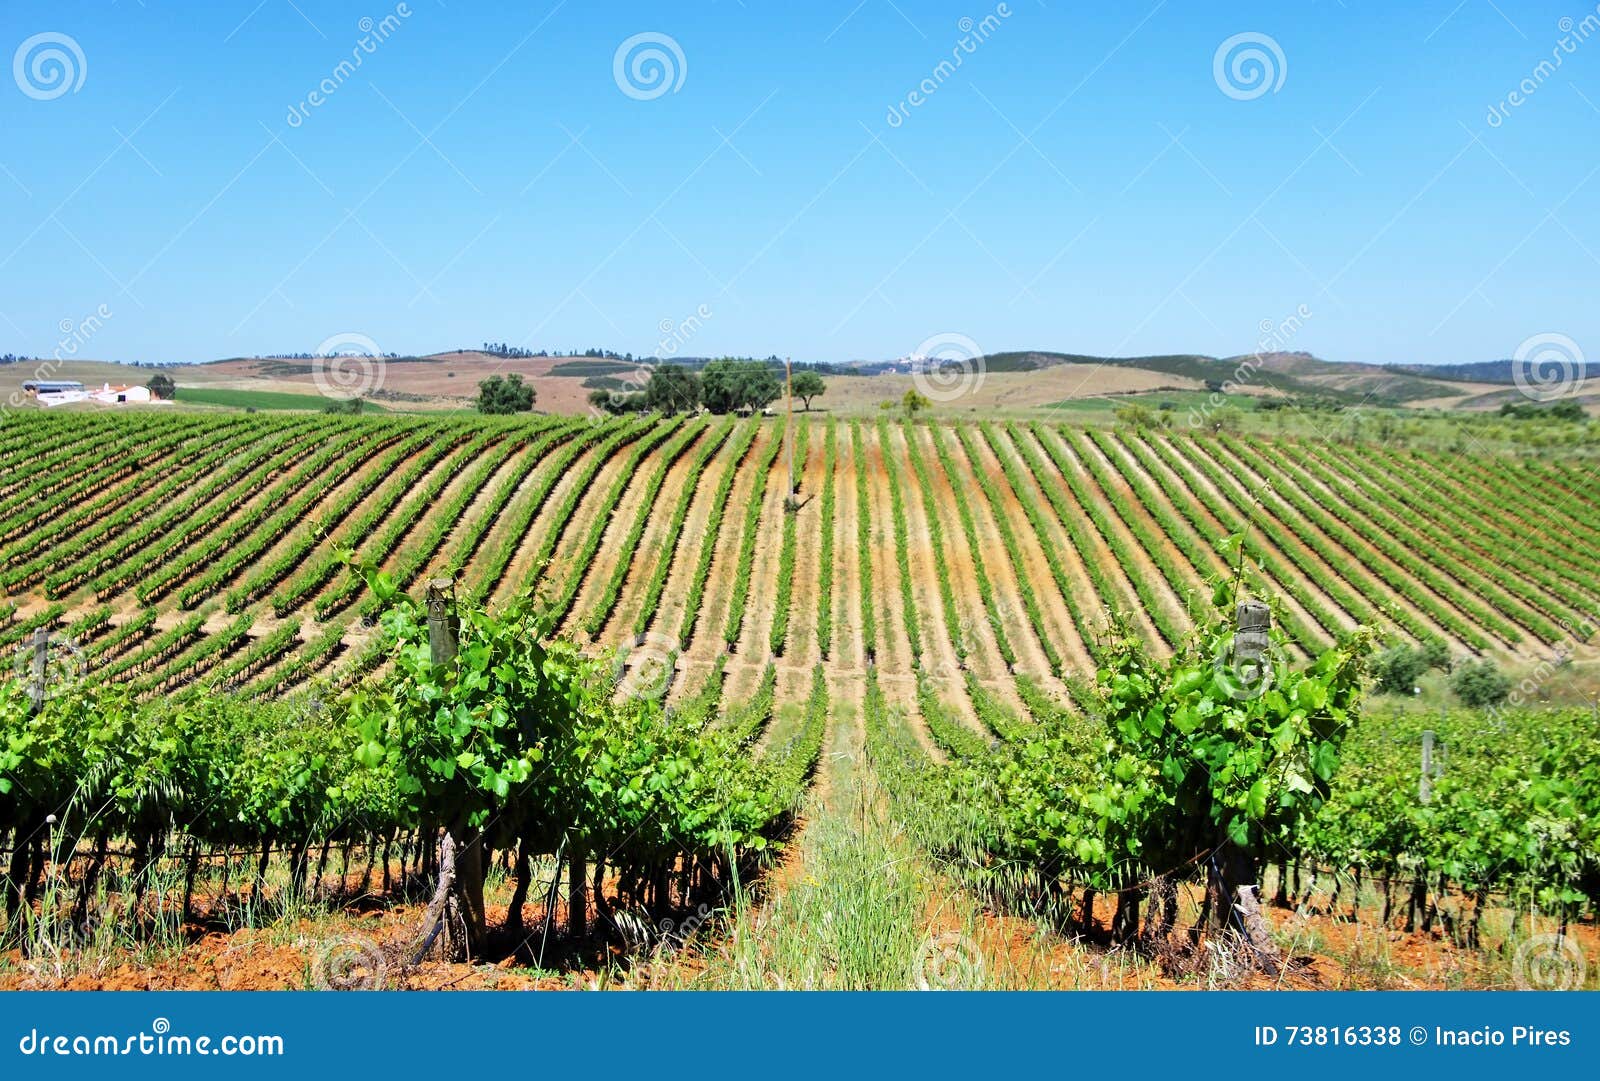 vineyard at alentejo, portugal.